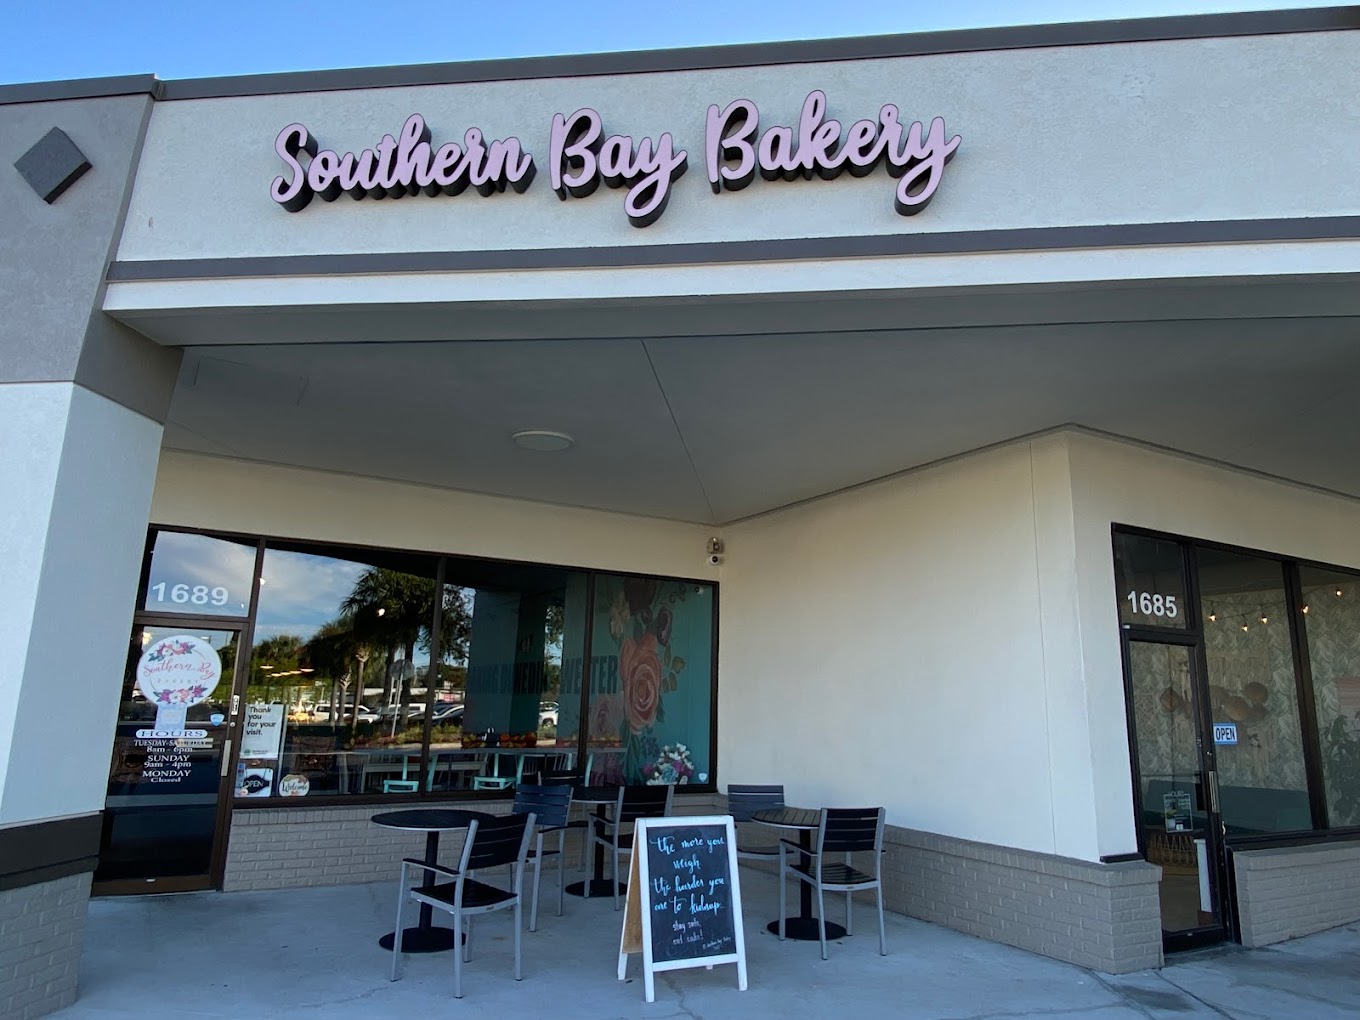 Southern Bay Bakery Building